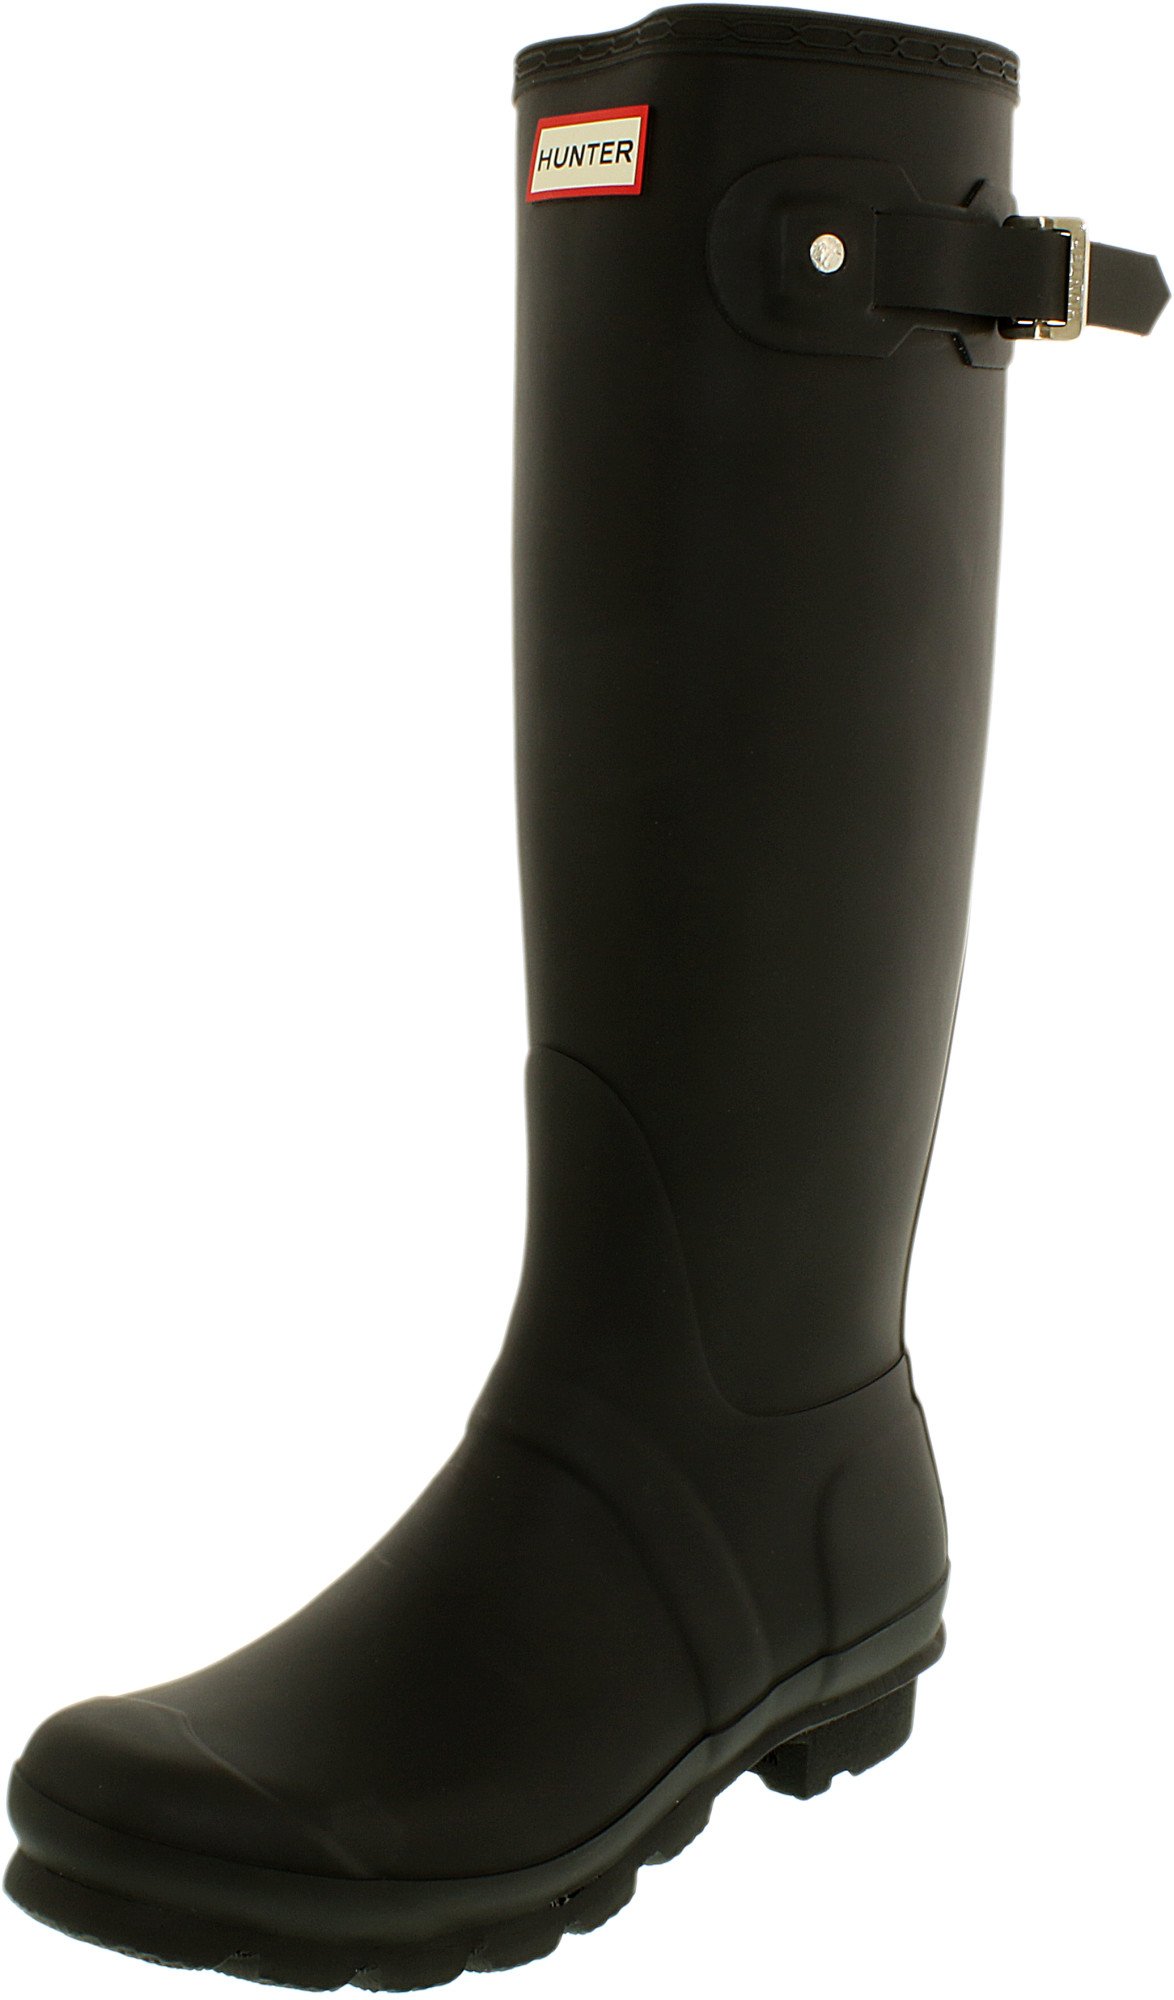 Hunter Women's Original Tall Rain Boots - image 1 of 3